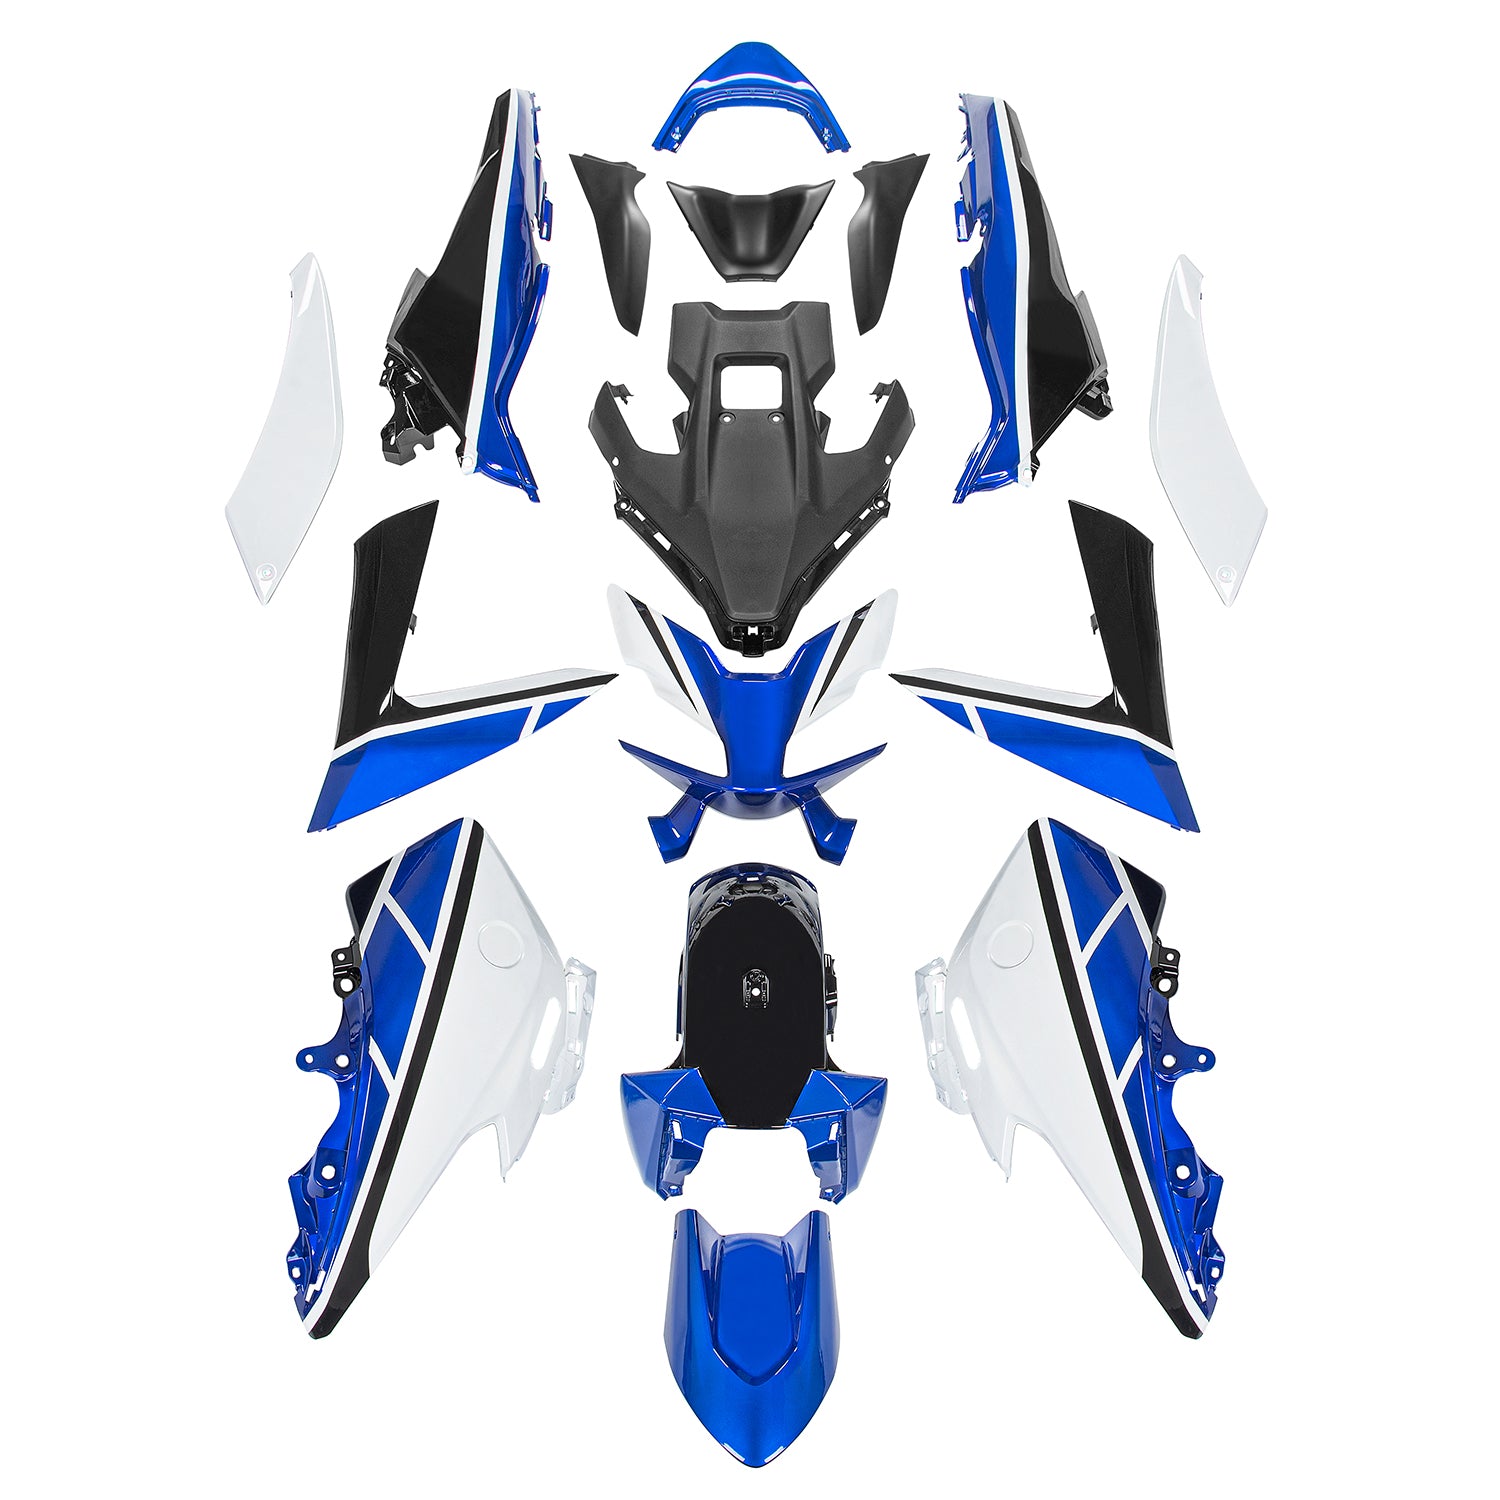 Kit carena Amotopart 2023-2024 Yamaha T-MAX 560 nero bianco blu